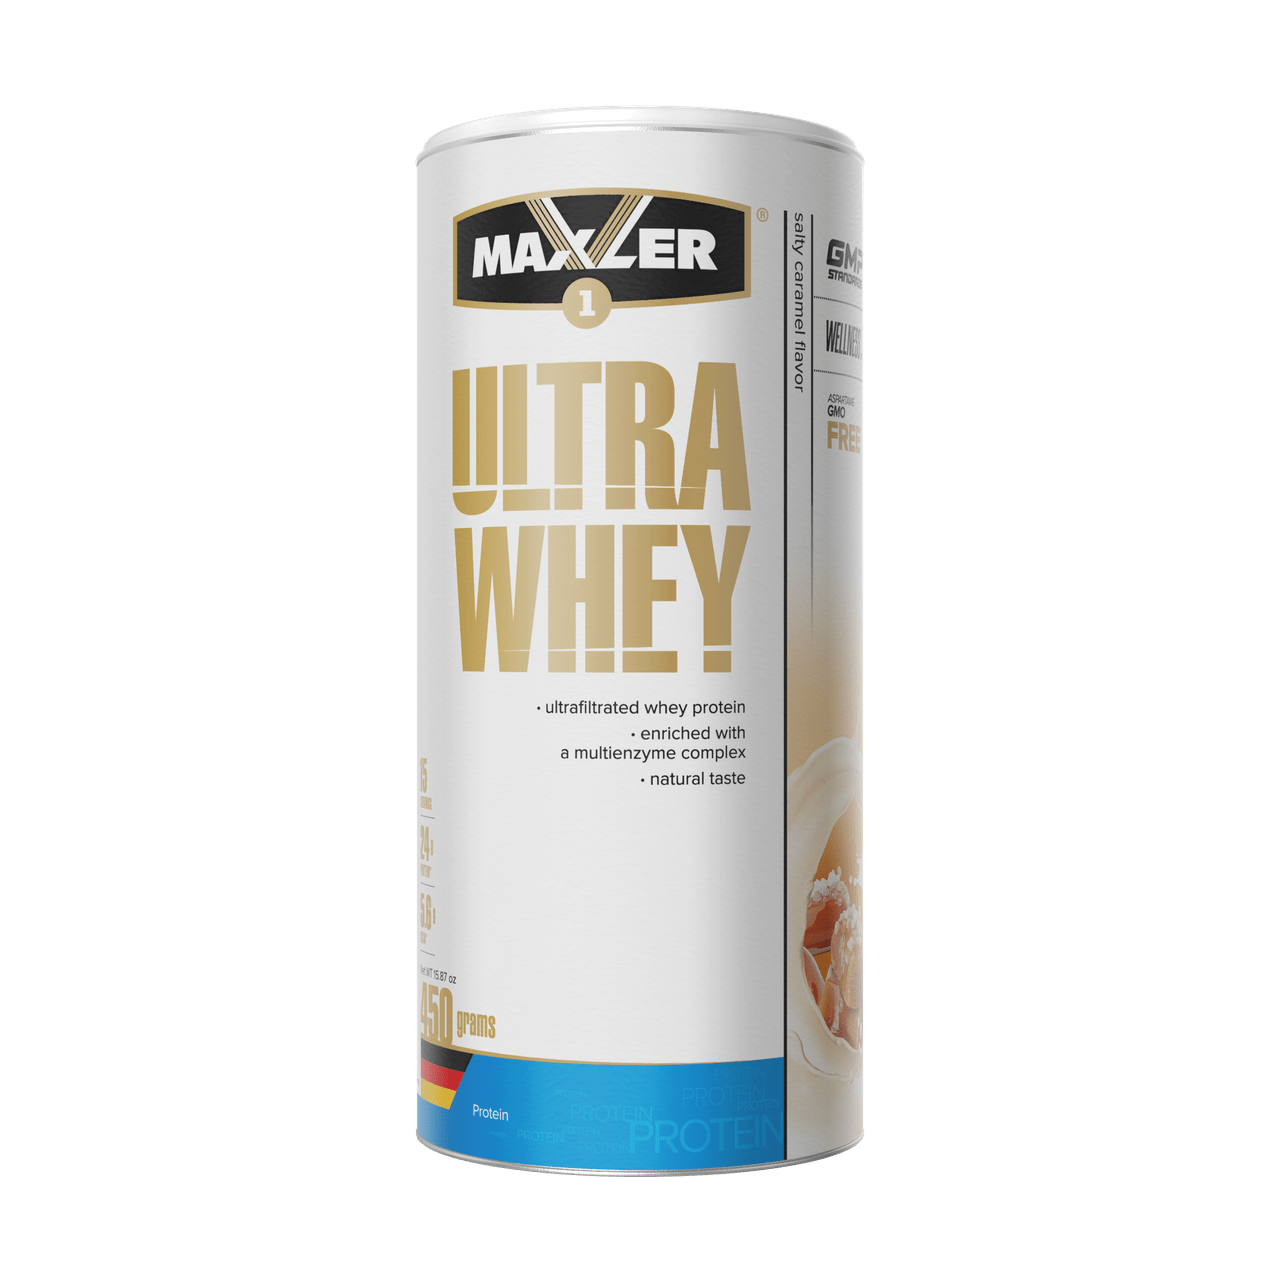 Комплексный протеин Maxler Ultra Whey (450 г) макслер ультра вей salty caramel,  мл, Maxler. Комплексный протеин. 